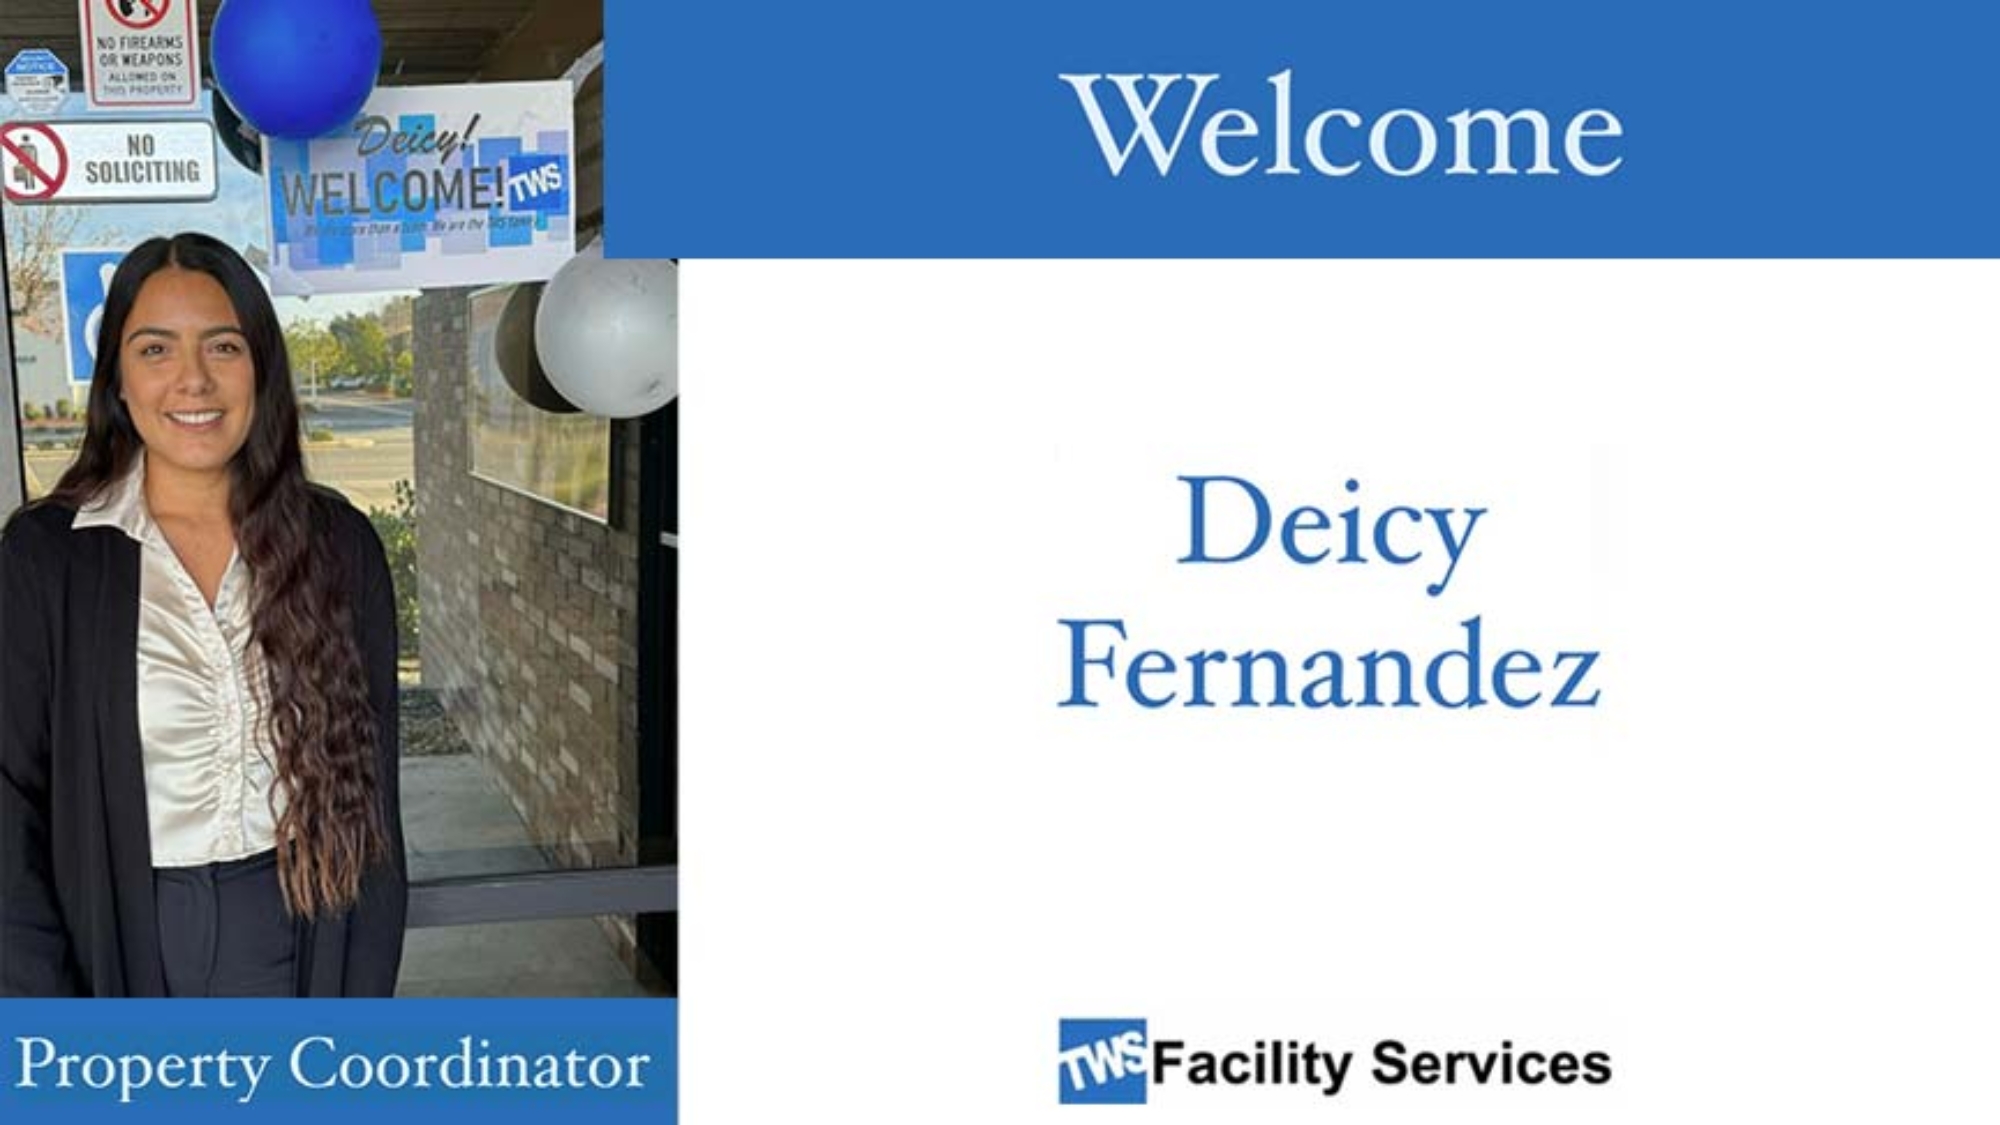 TWS-Welcome-Deicy-Fernandez